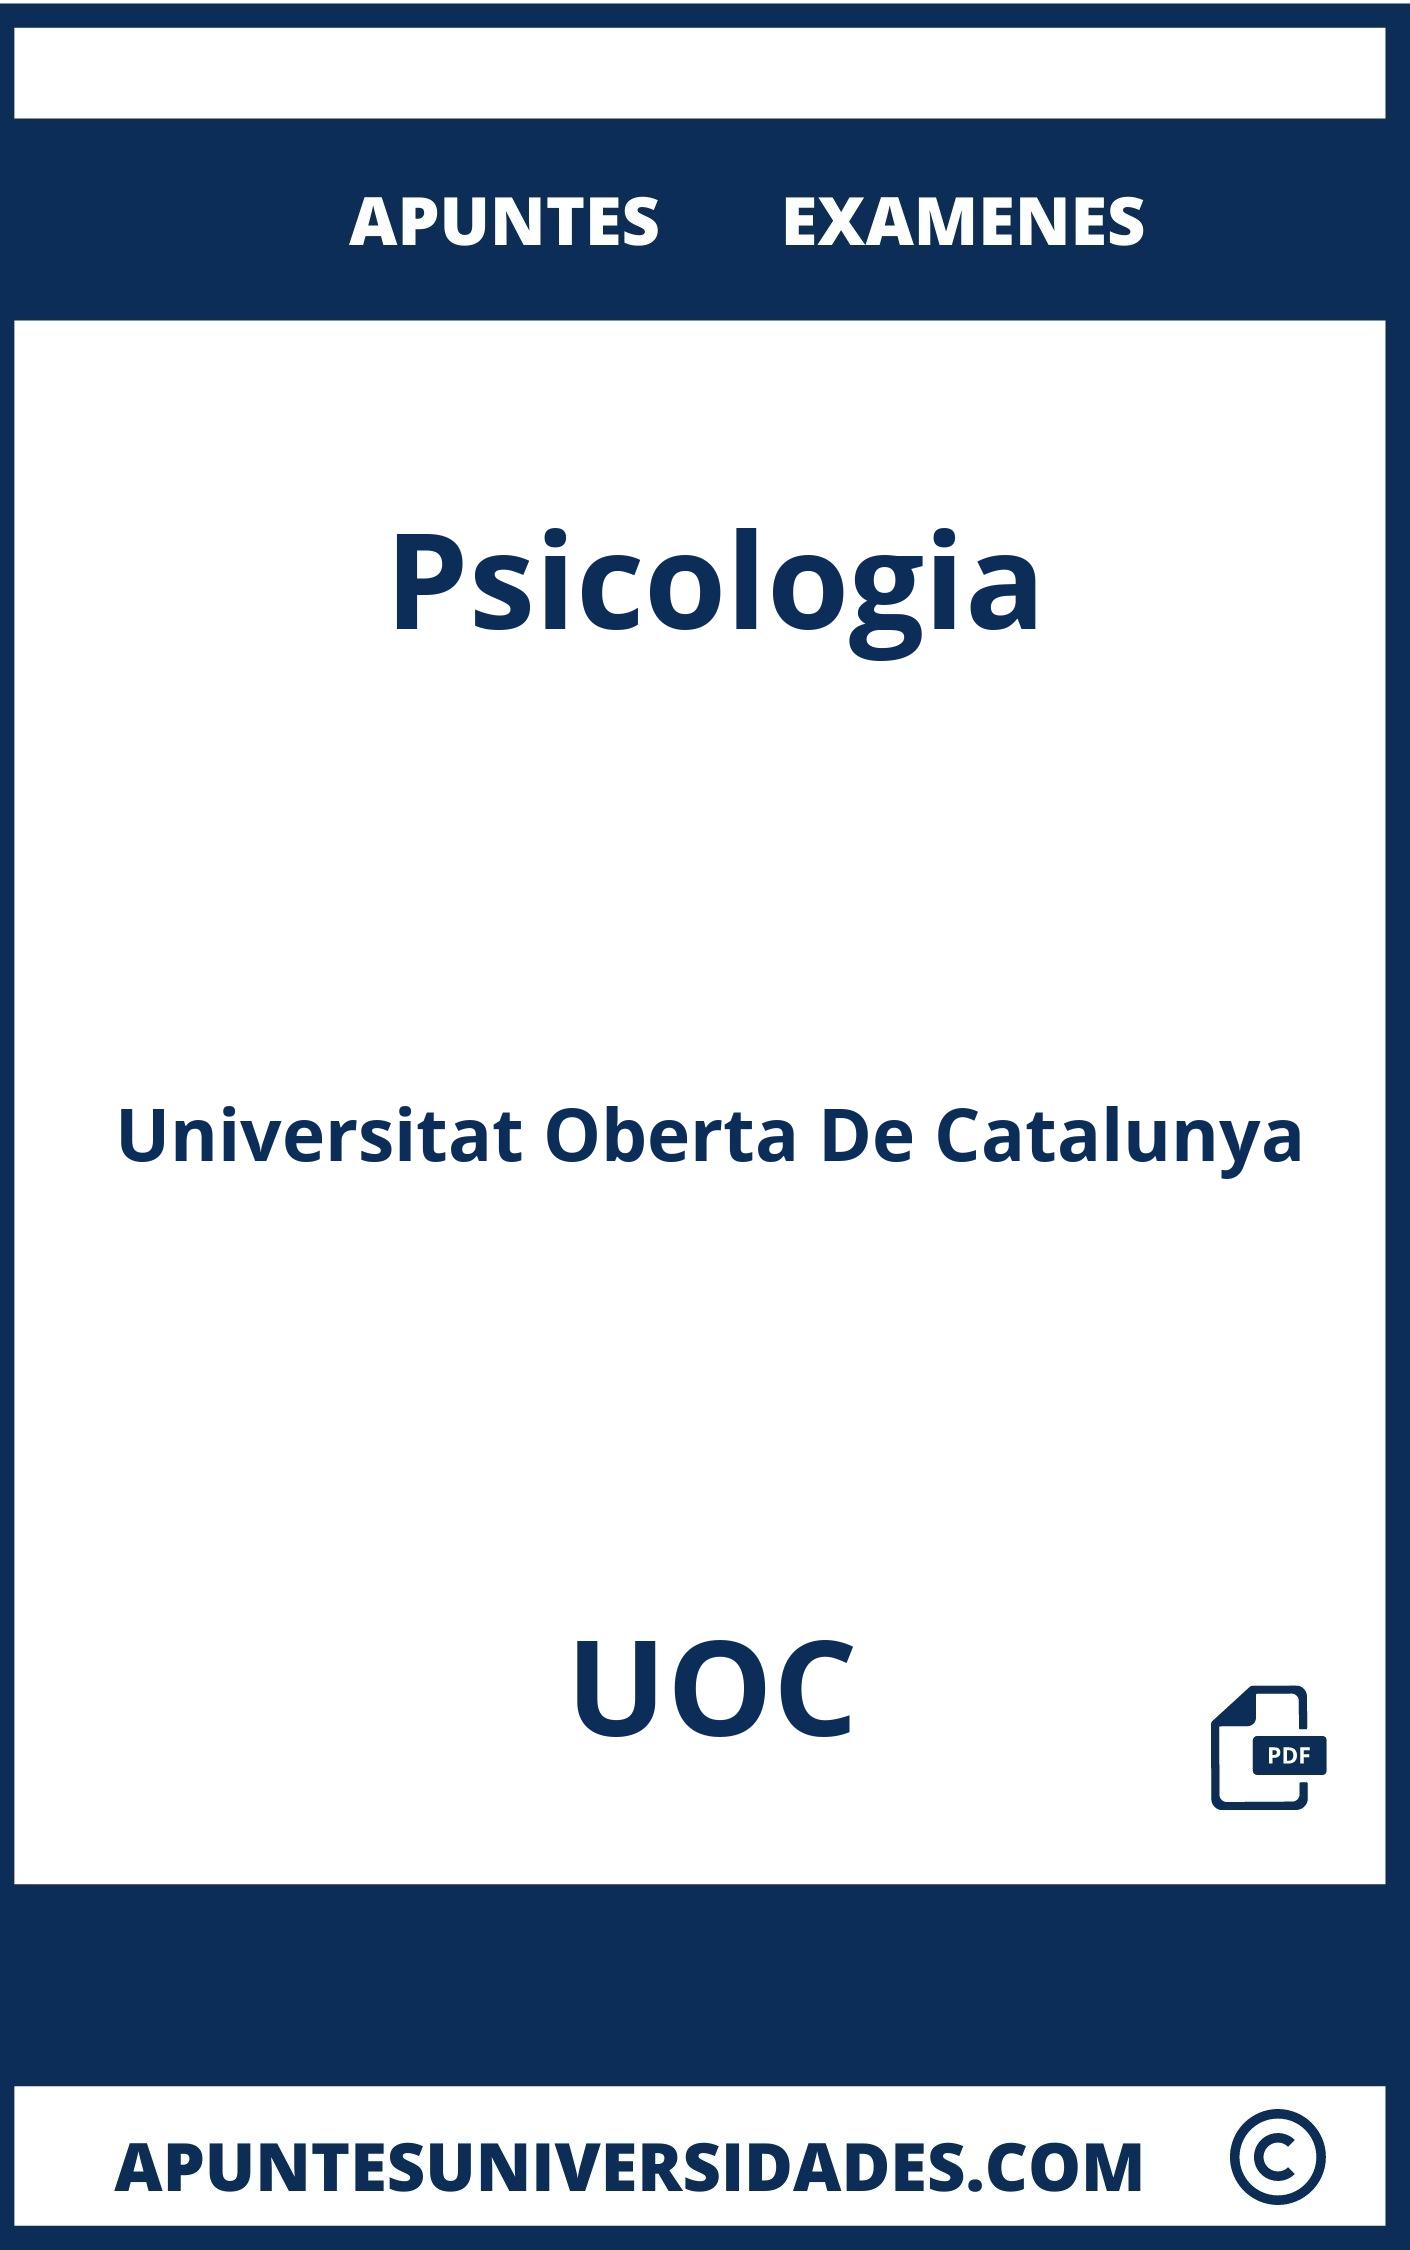 Apuntes Psicologia UOC y Examenes